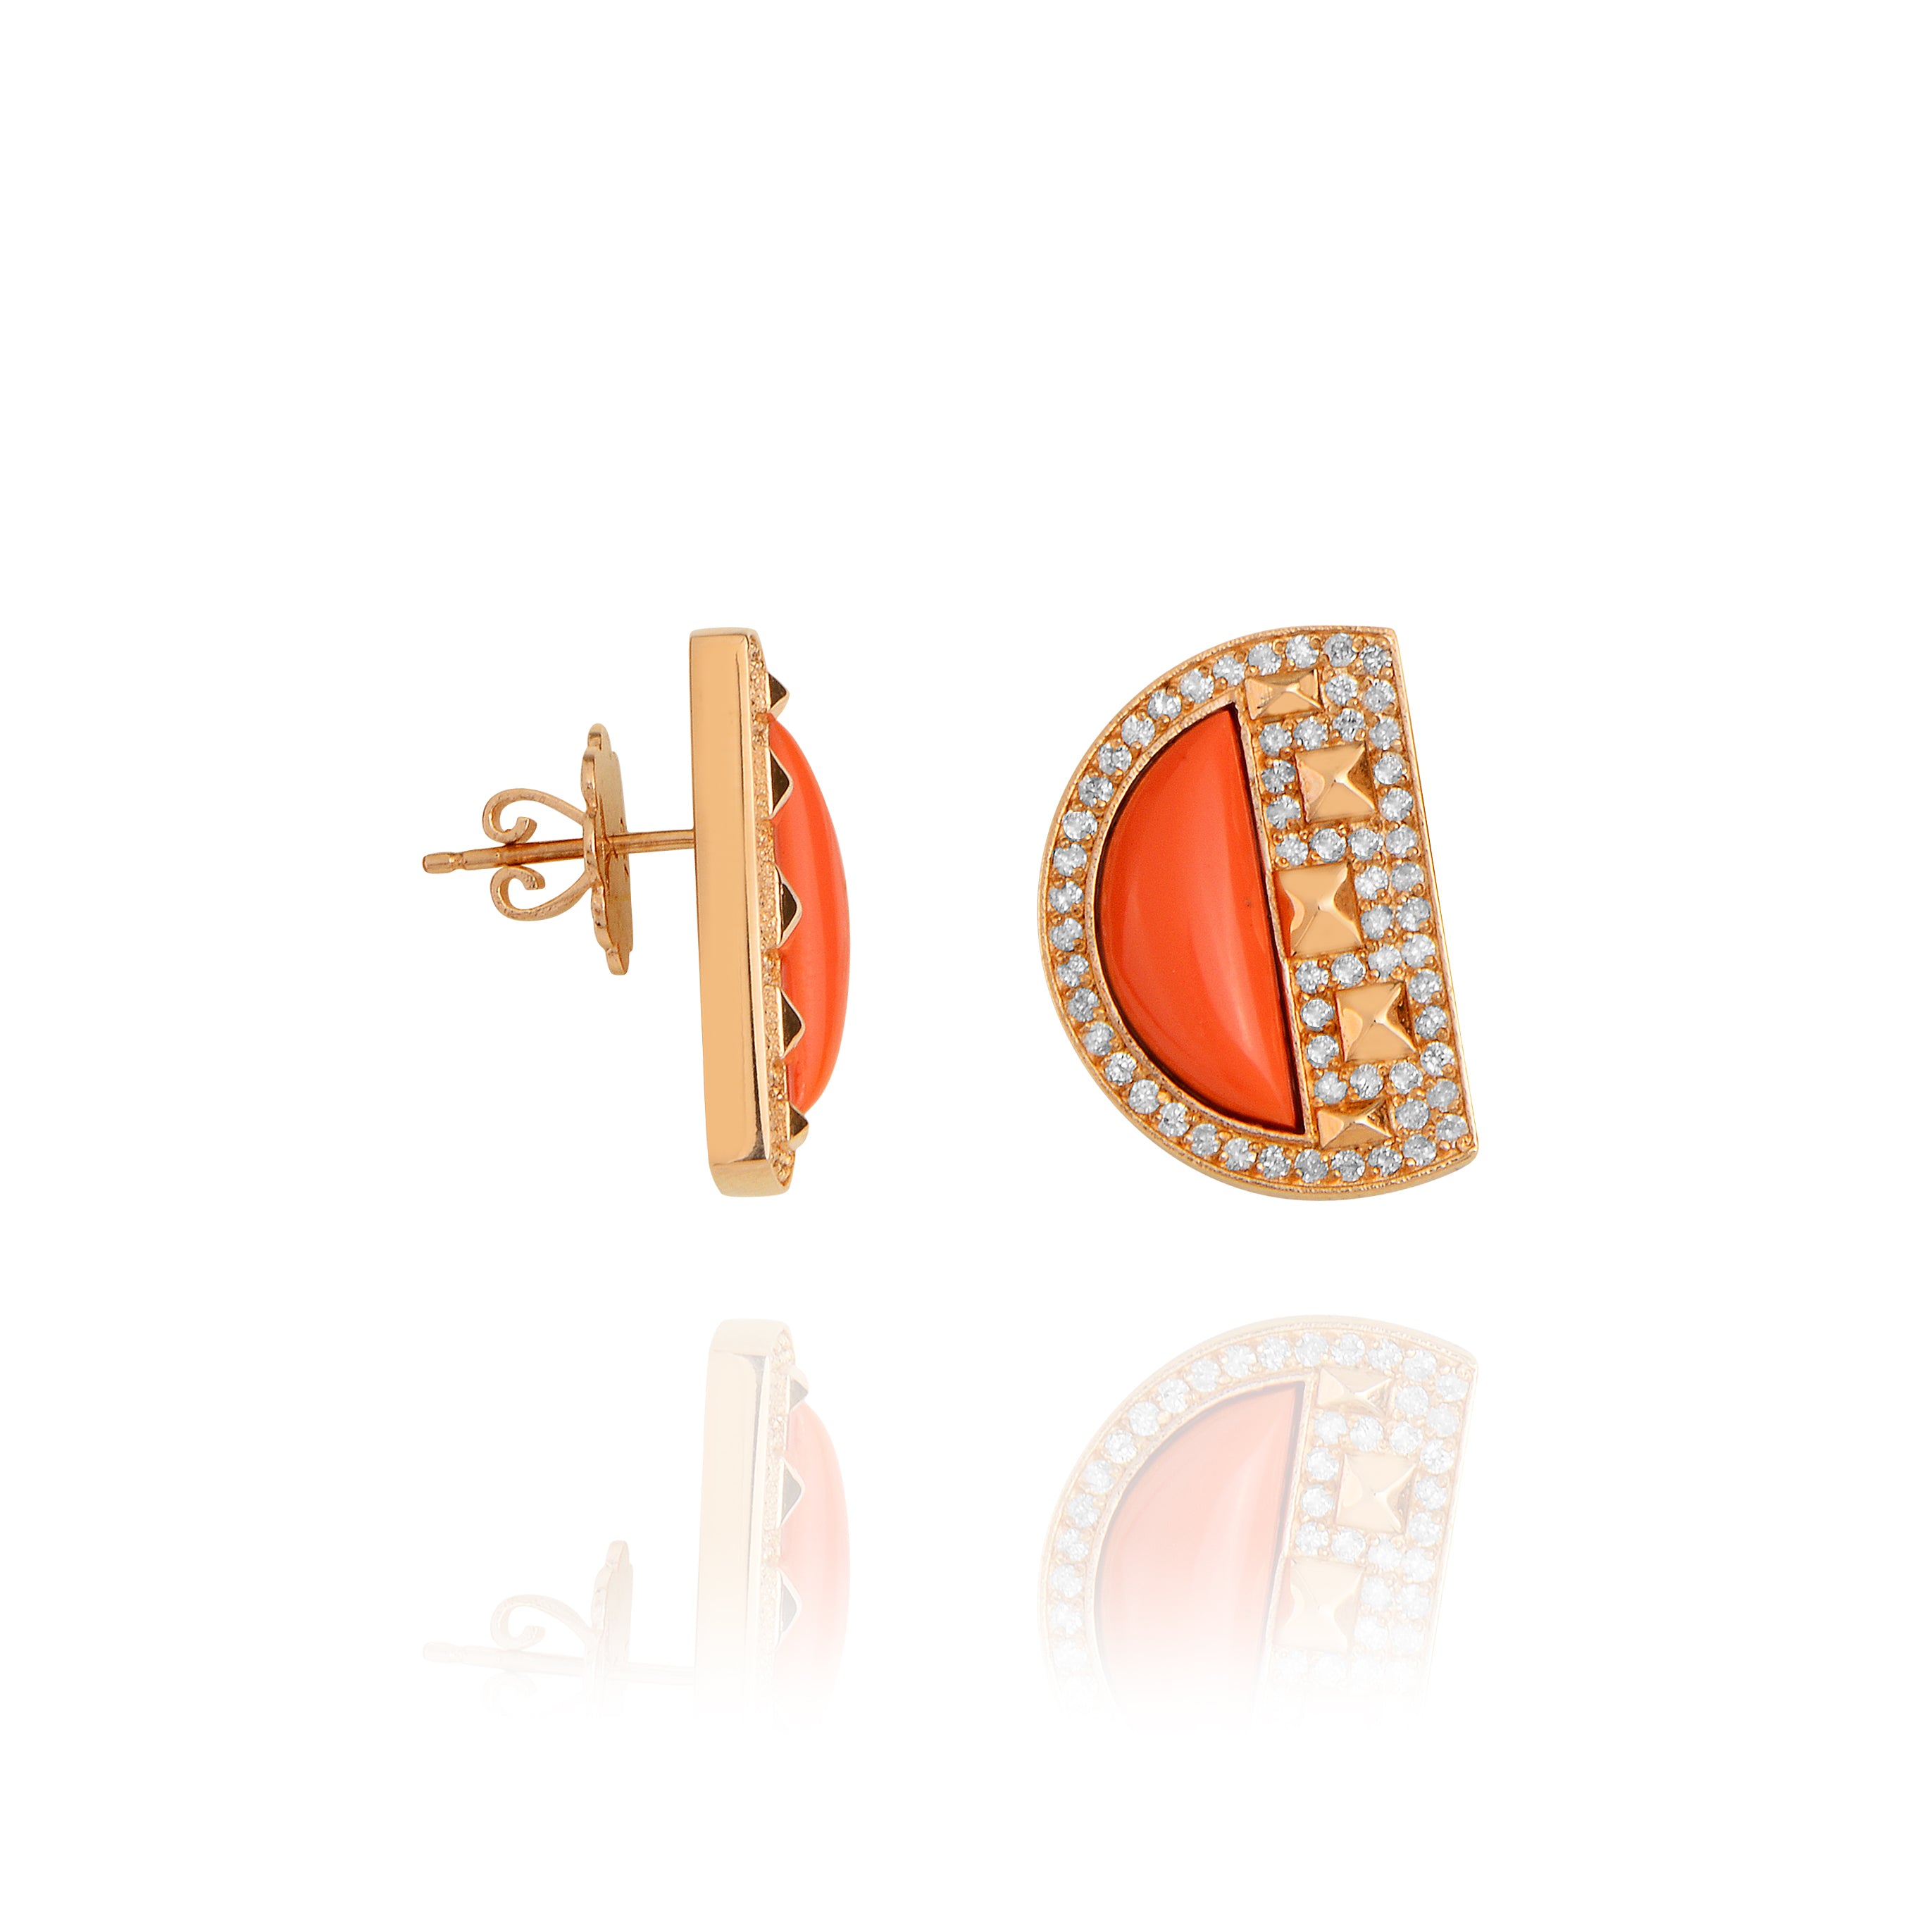 Neutra Cairo Earrings - Coral